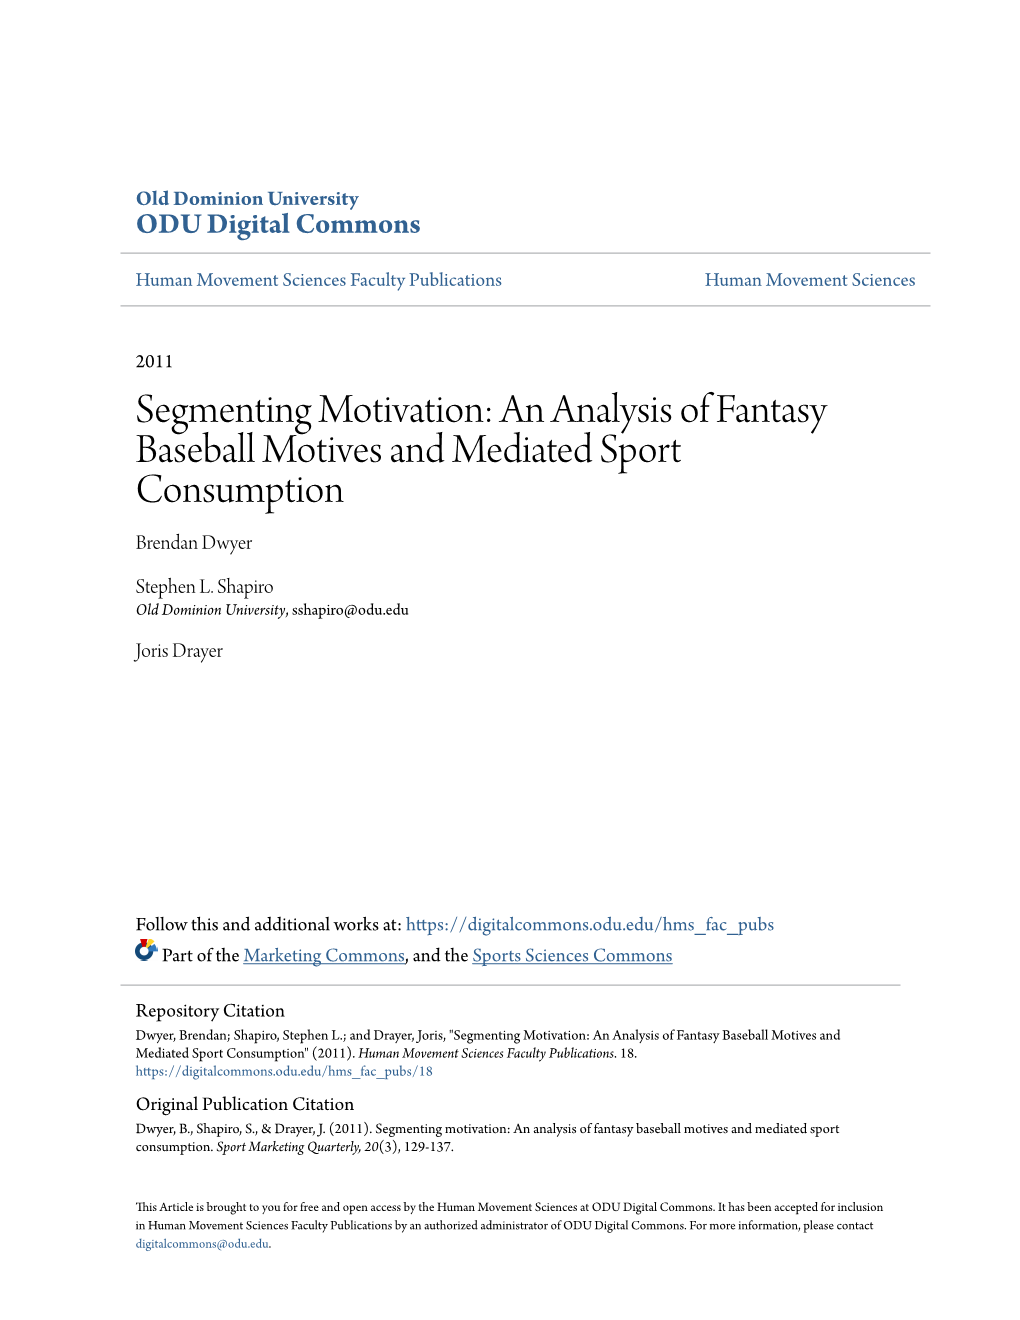 An Analysis of Fantasy Baseball Motives and Mediated Sport Consumption Brendan Dwyer